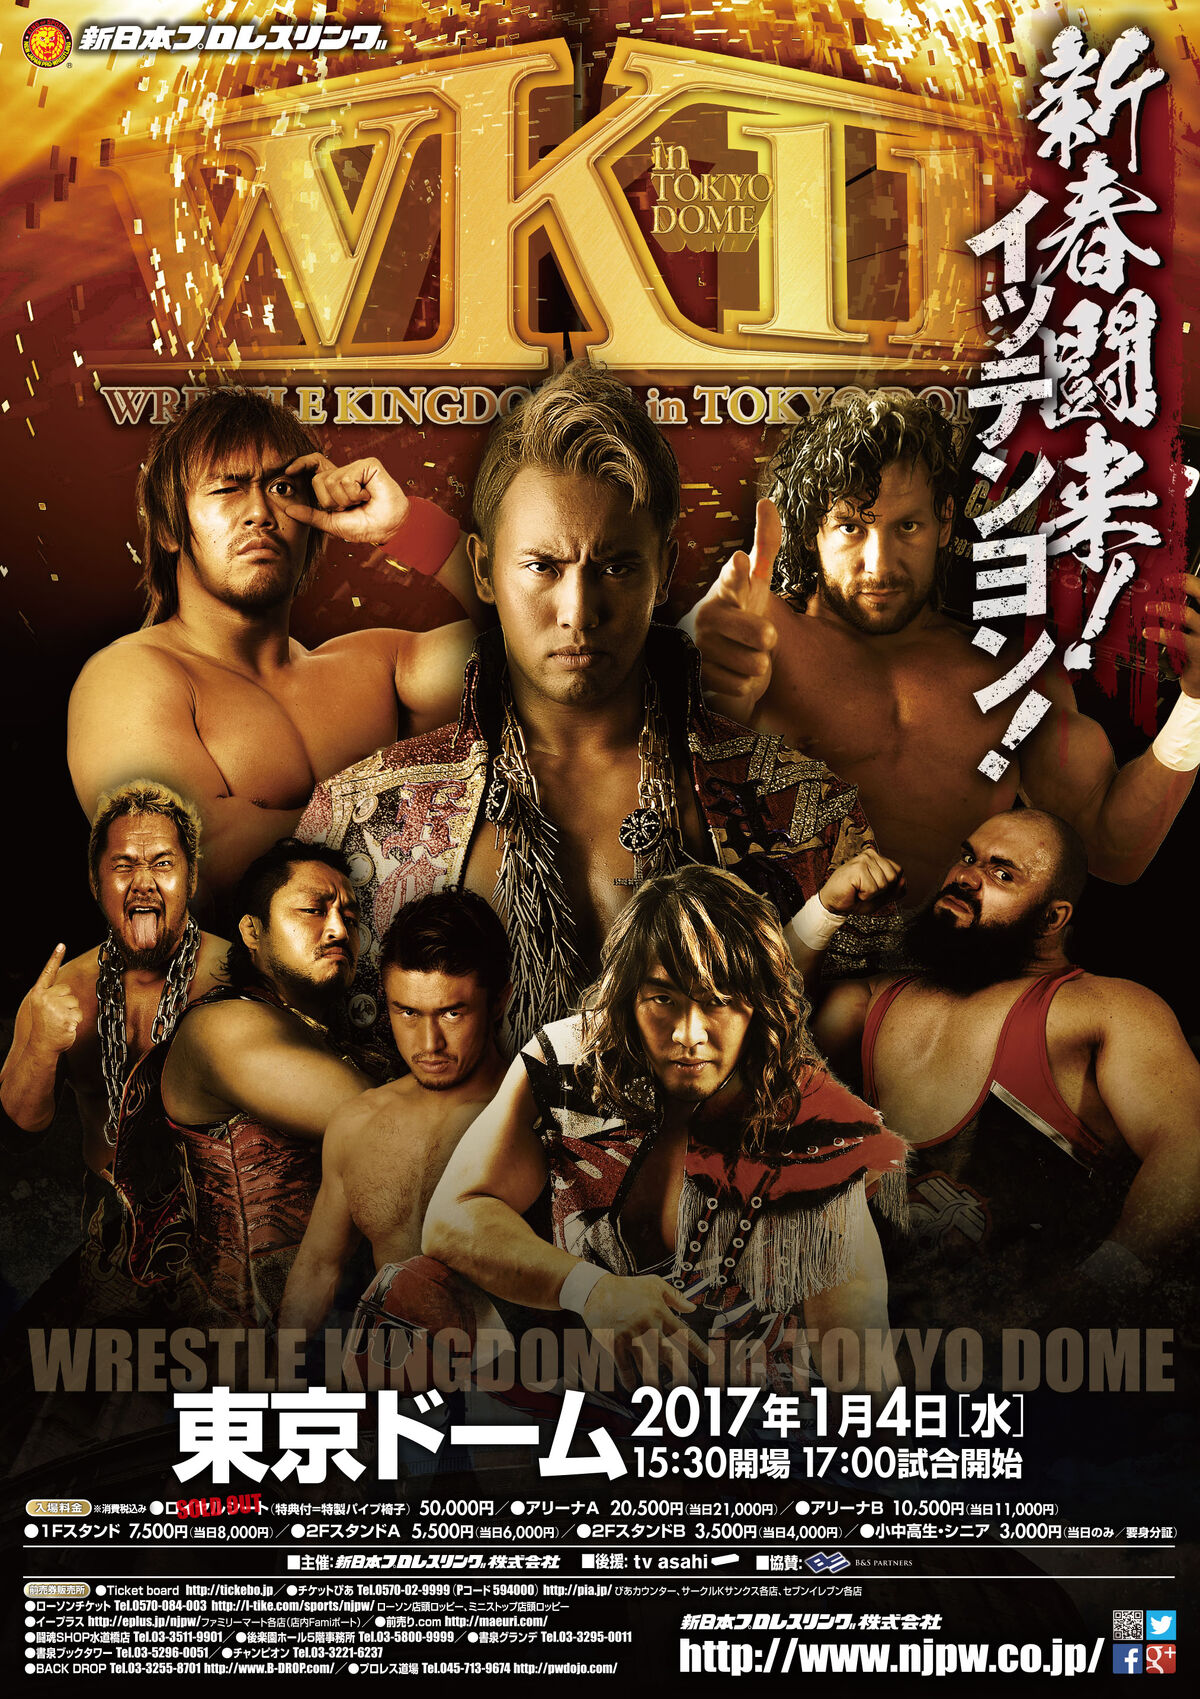 Wrestle Kingdom 17 - Wikipedia